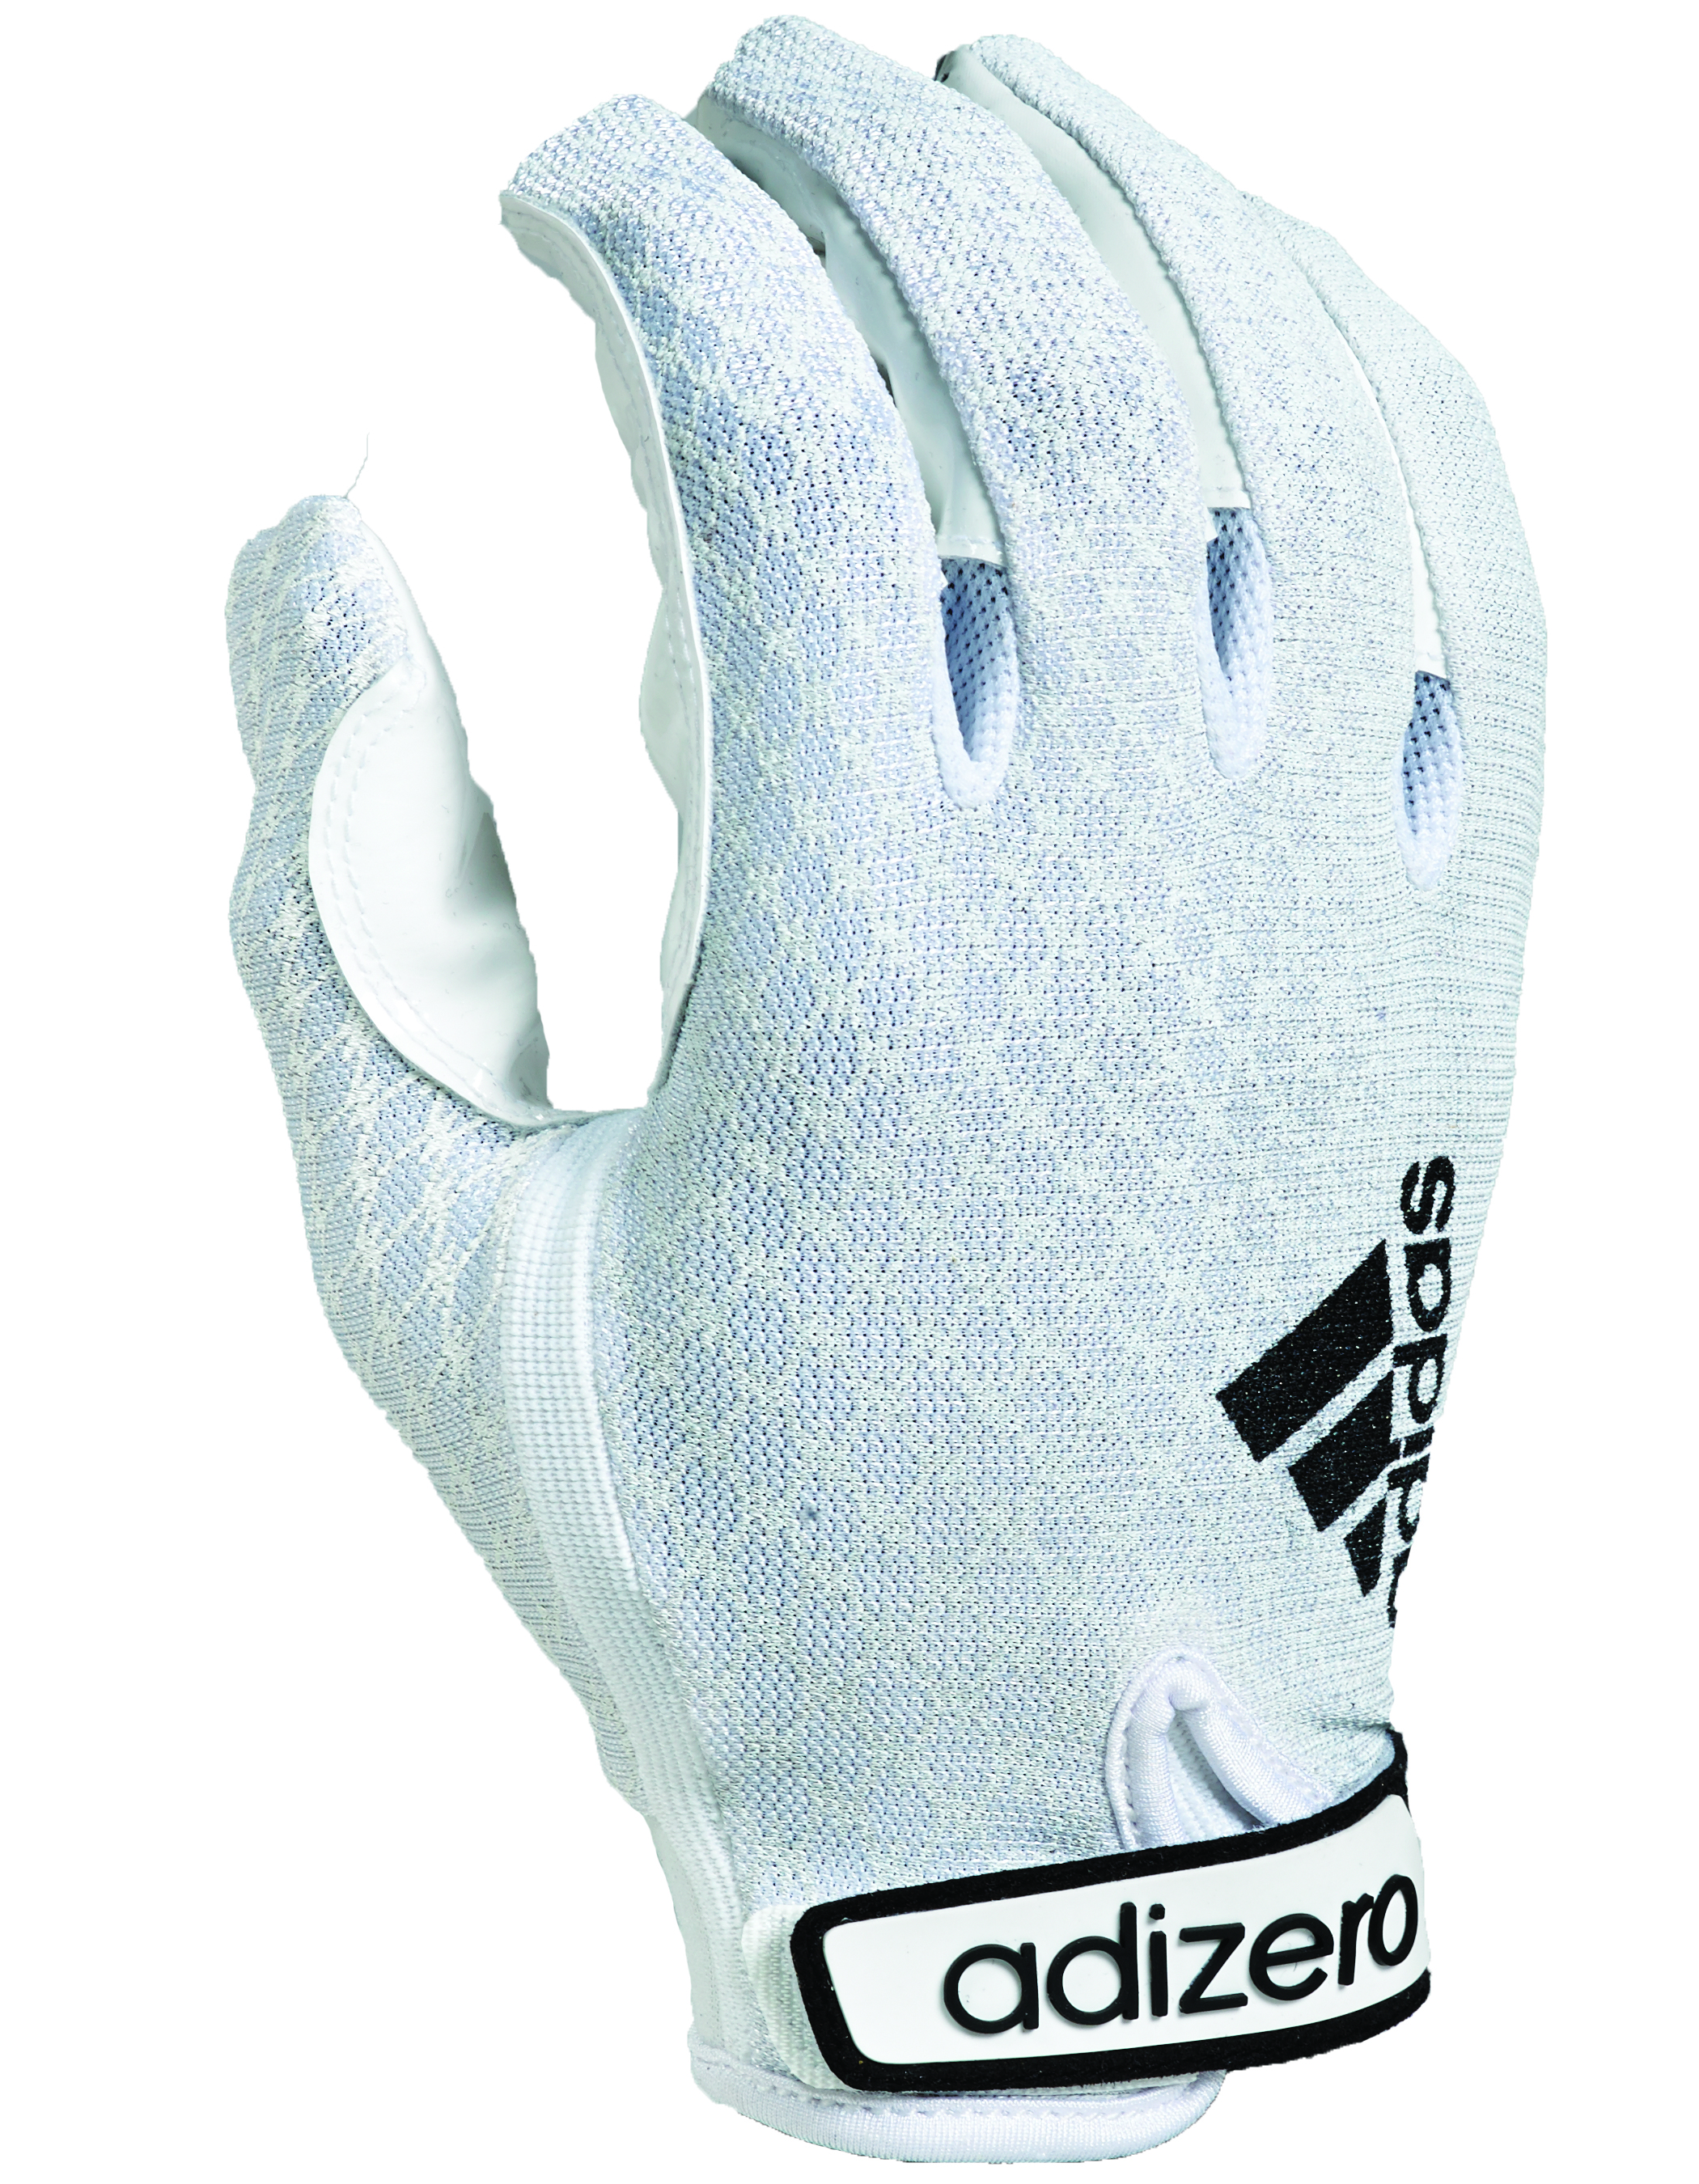 adizero 5.0 gloves